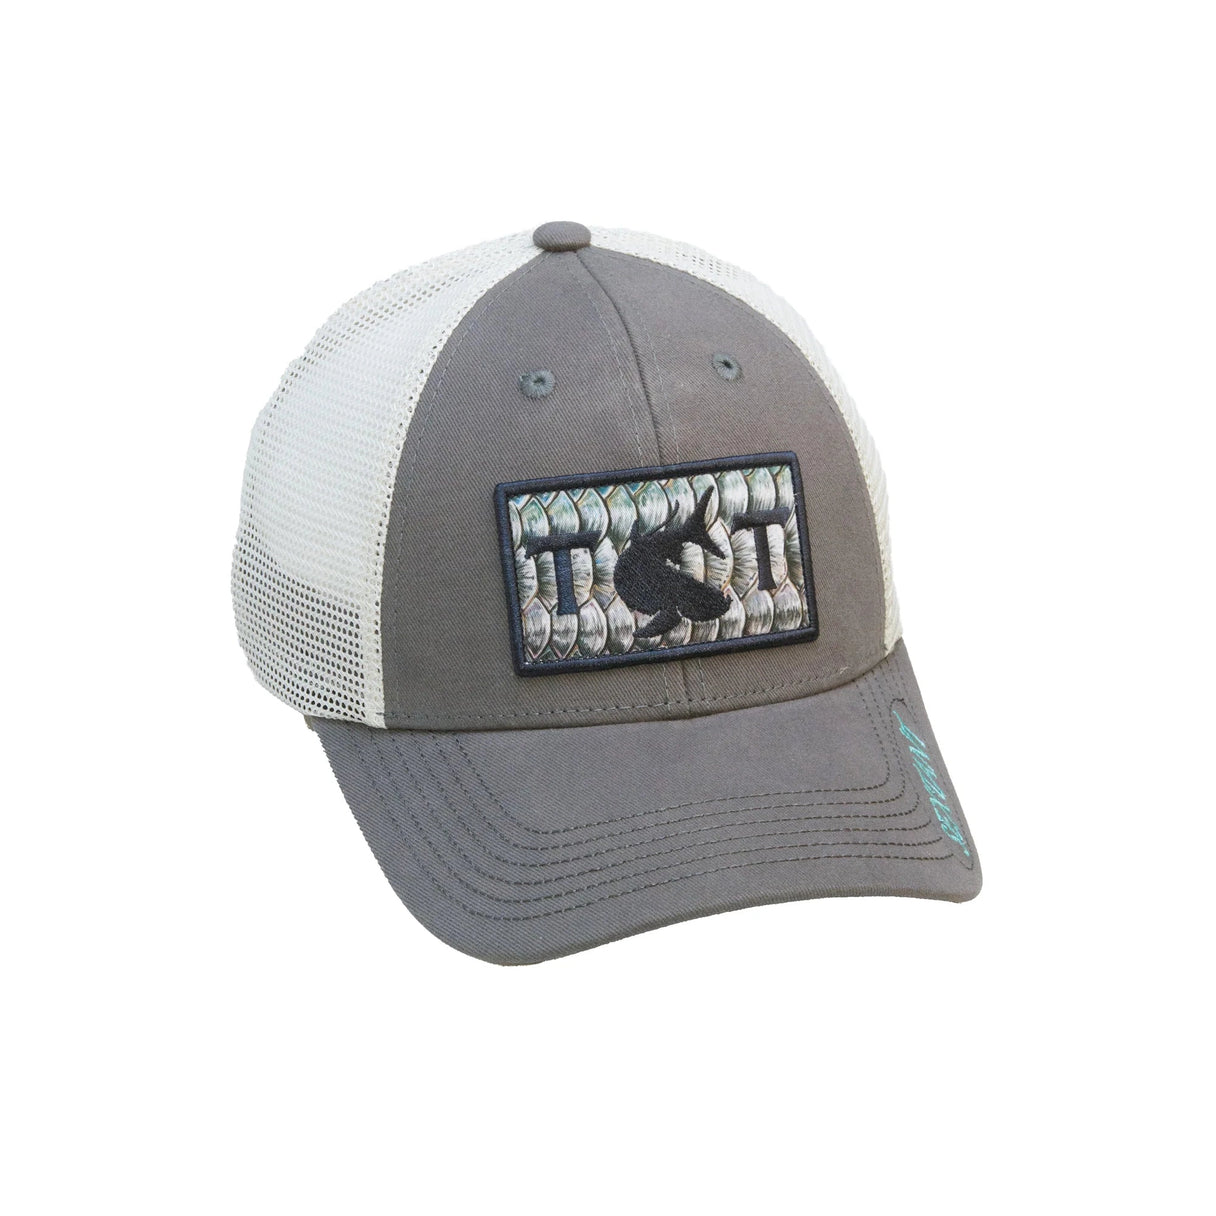 Thomas & Thomas Tarpon Trucker Hat w/ T&T Badge